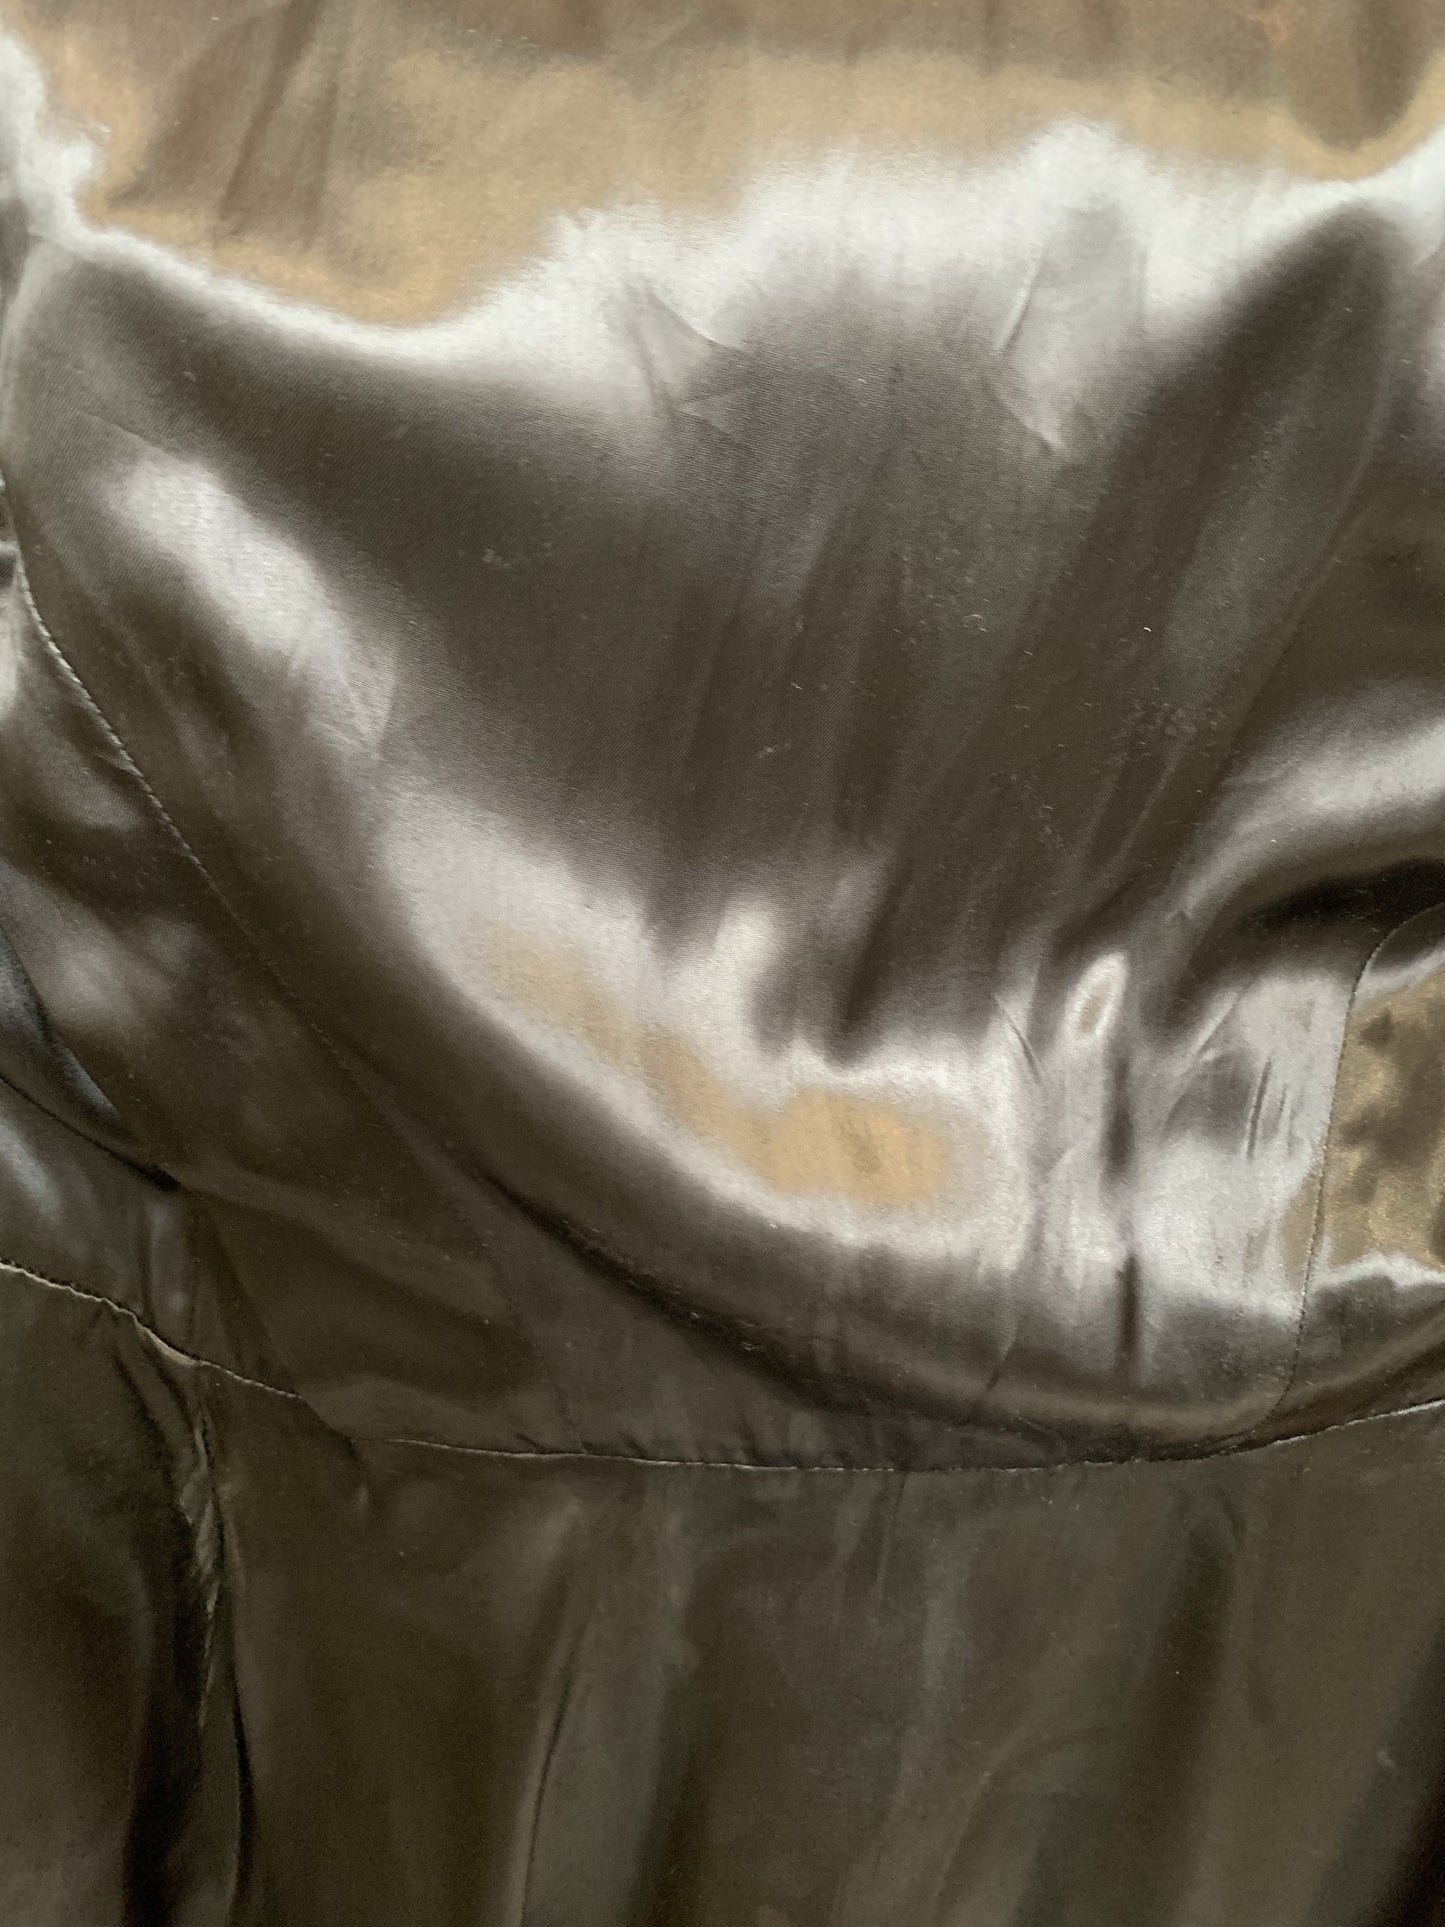 Lysis vintage Claude Montana Ideal leather winter coat - M - 1992